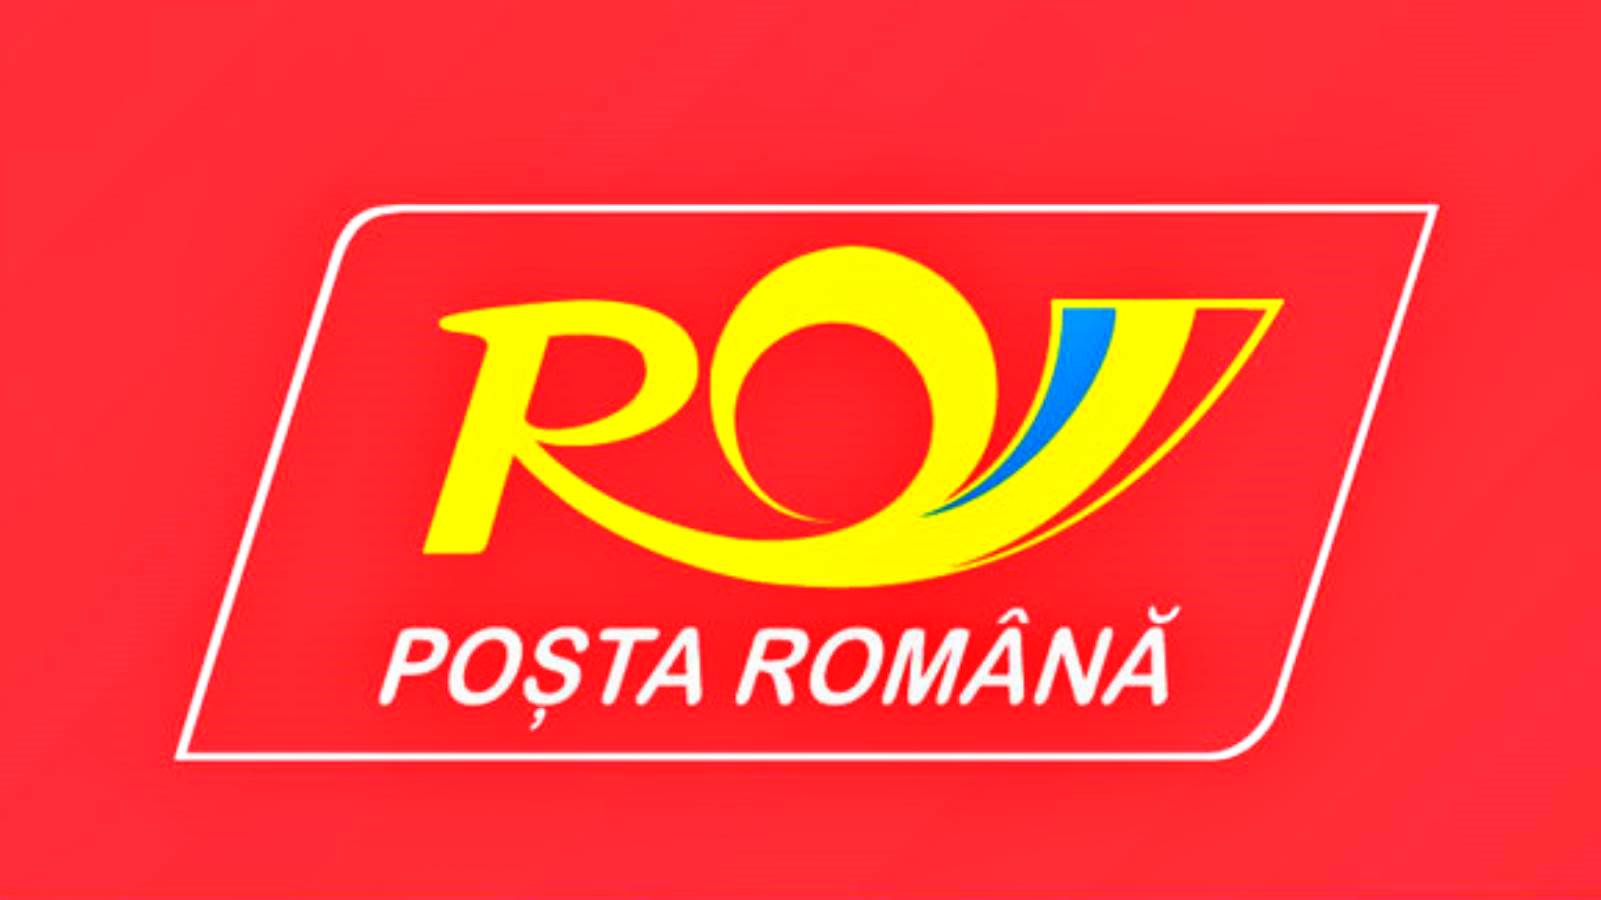 Advertencia postal rumana sobre objetos prohibidos en paquetes